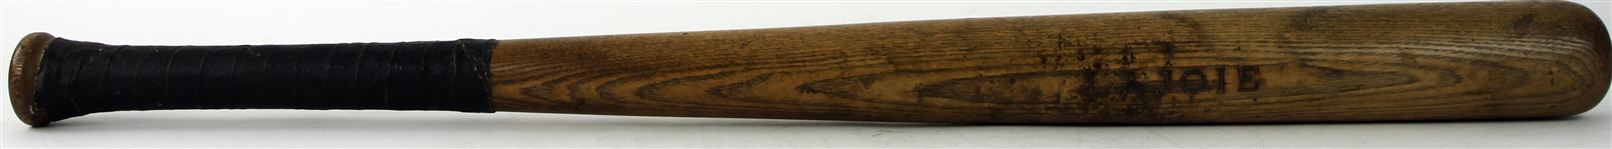 1900s Napoleon Lajoie Cleveland Naps Professional Model Bat (MEARS LOA)